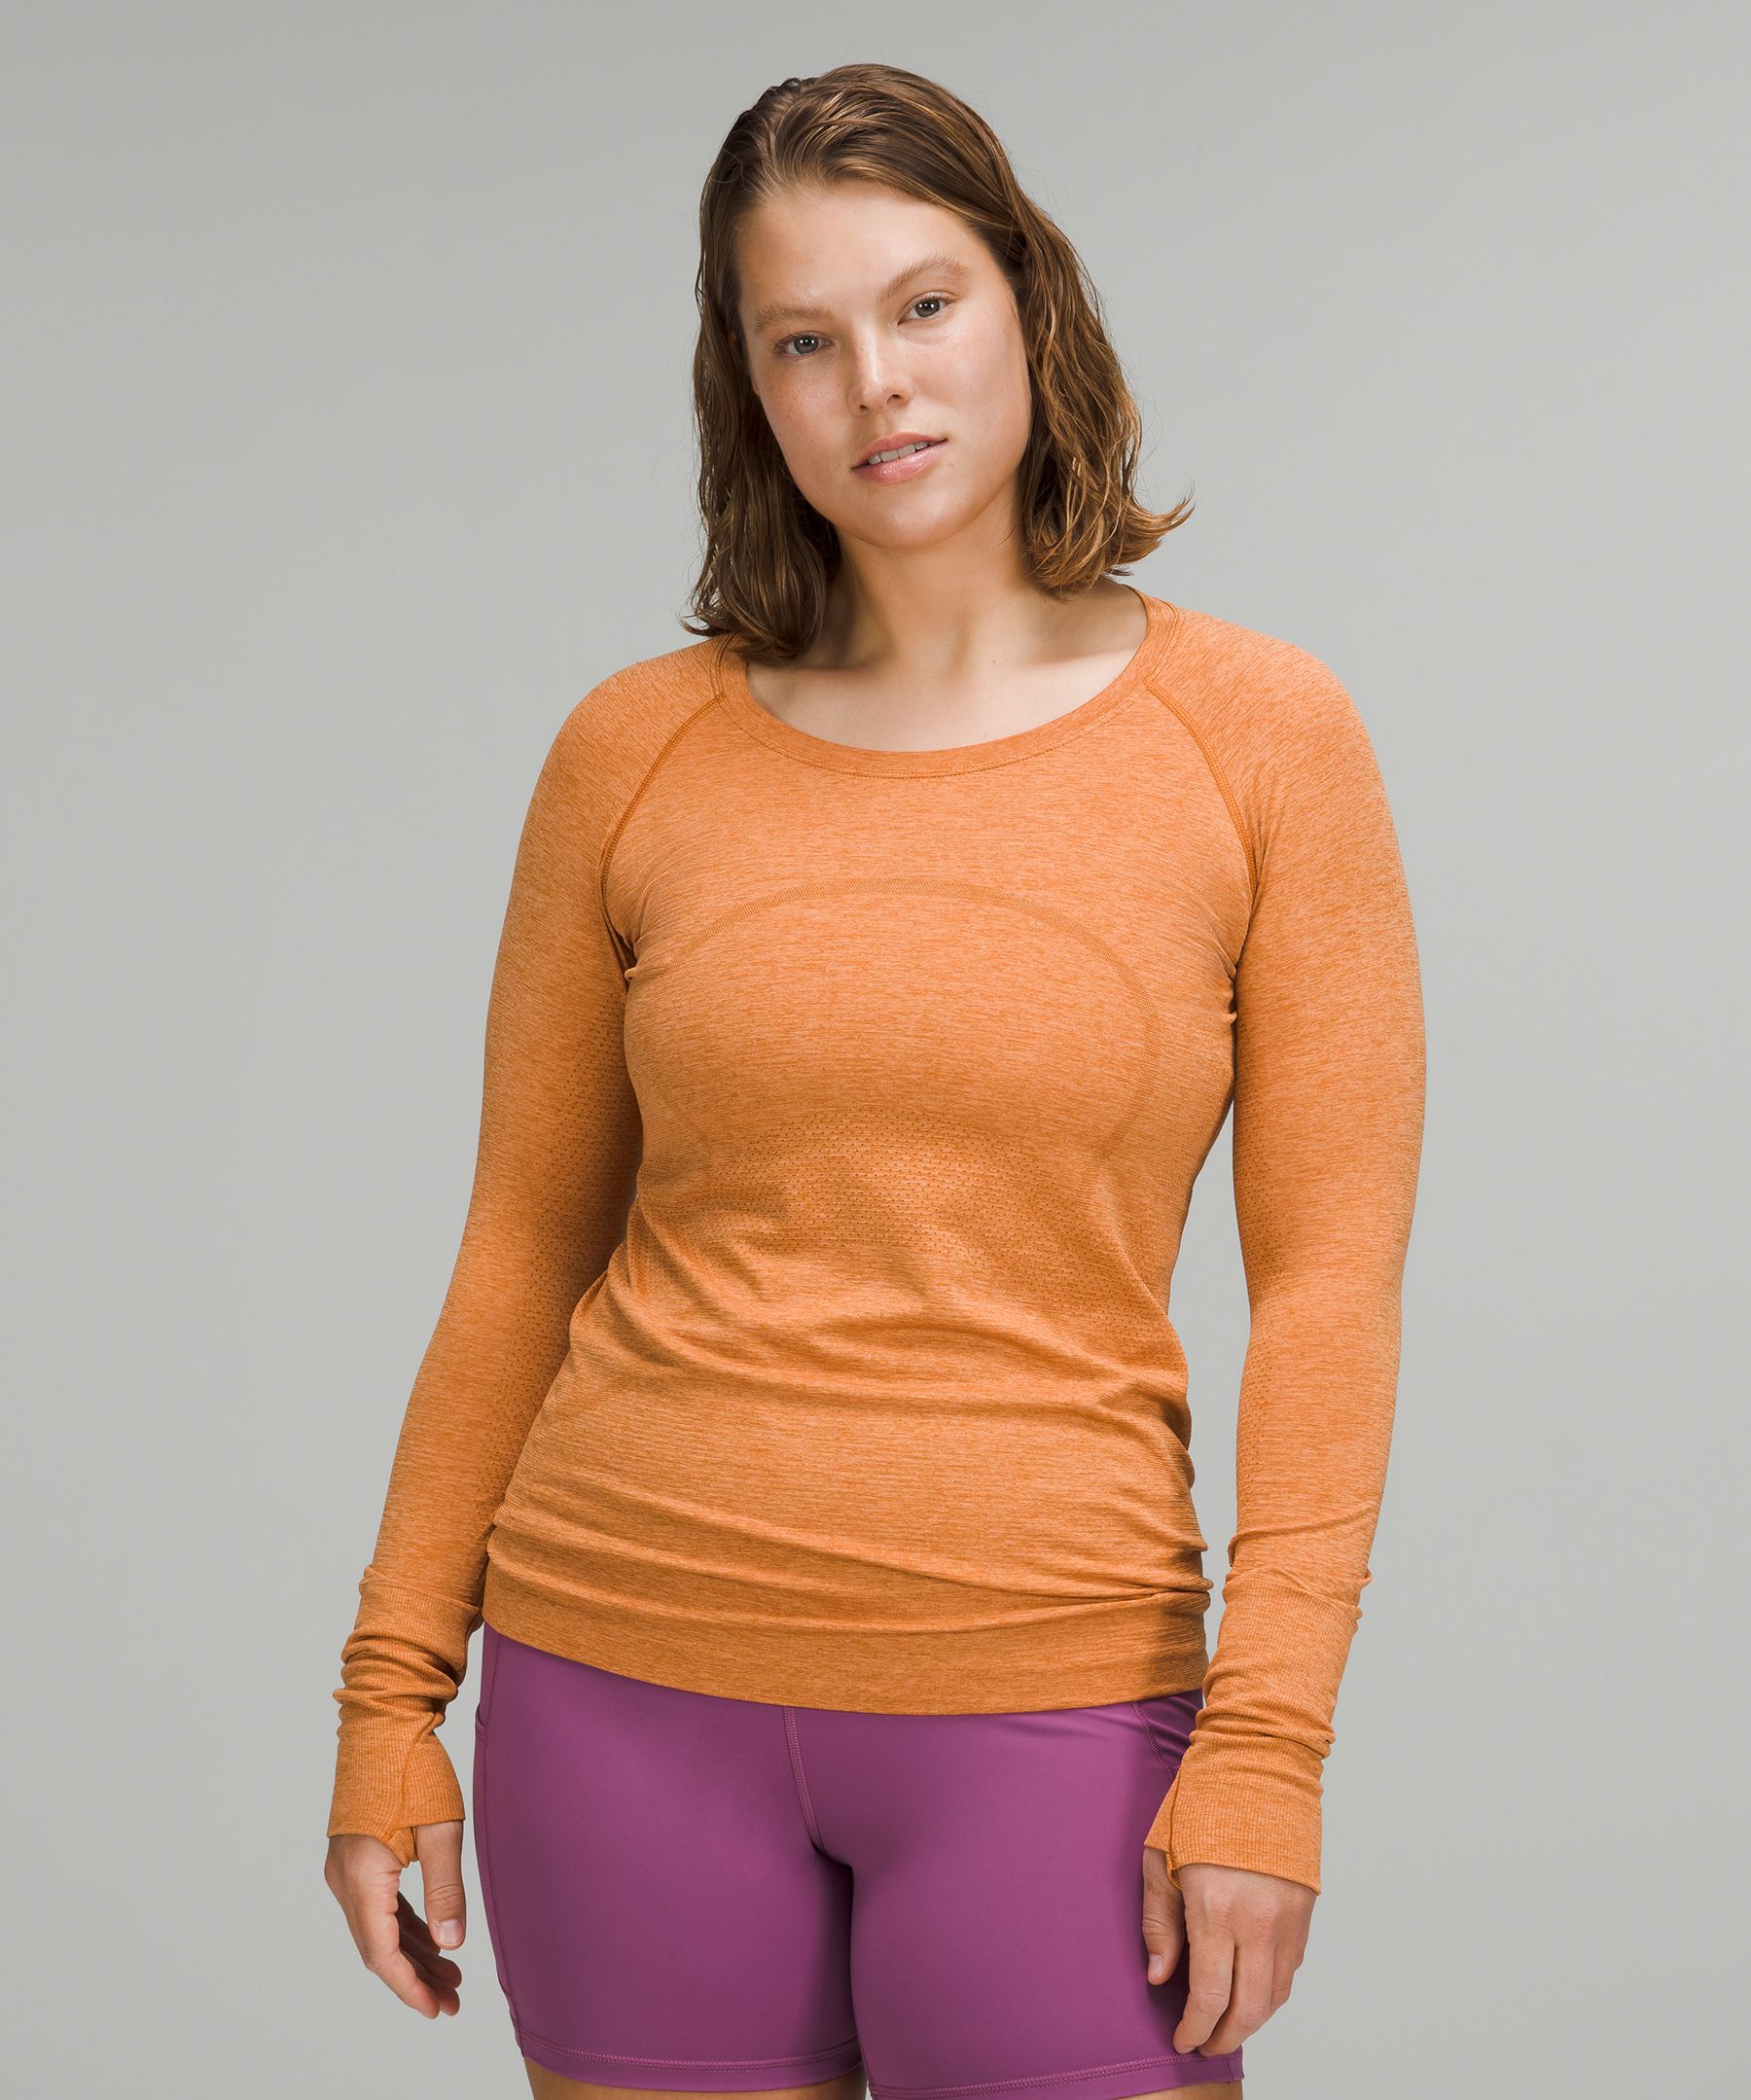 lululemon athletica Swiftly Tech Long Sleeve Shirt 2.0 Race Length in  Orange